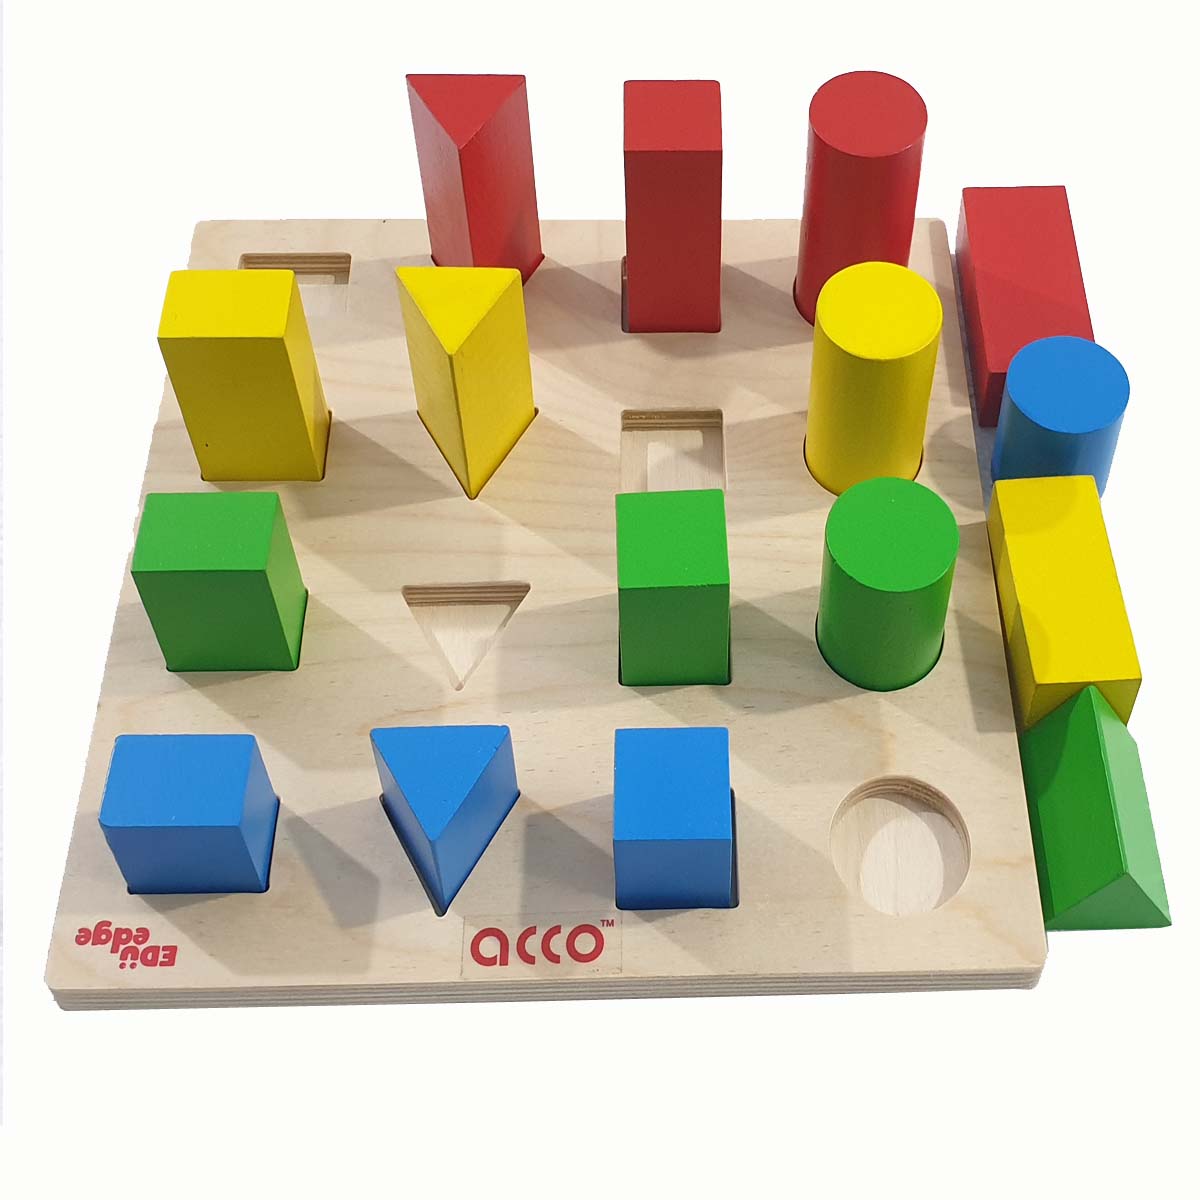 acco Multi Shape Peg Board Toys for Kids (20 Pegs)